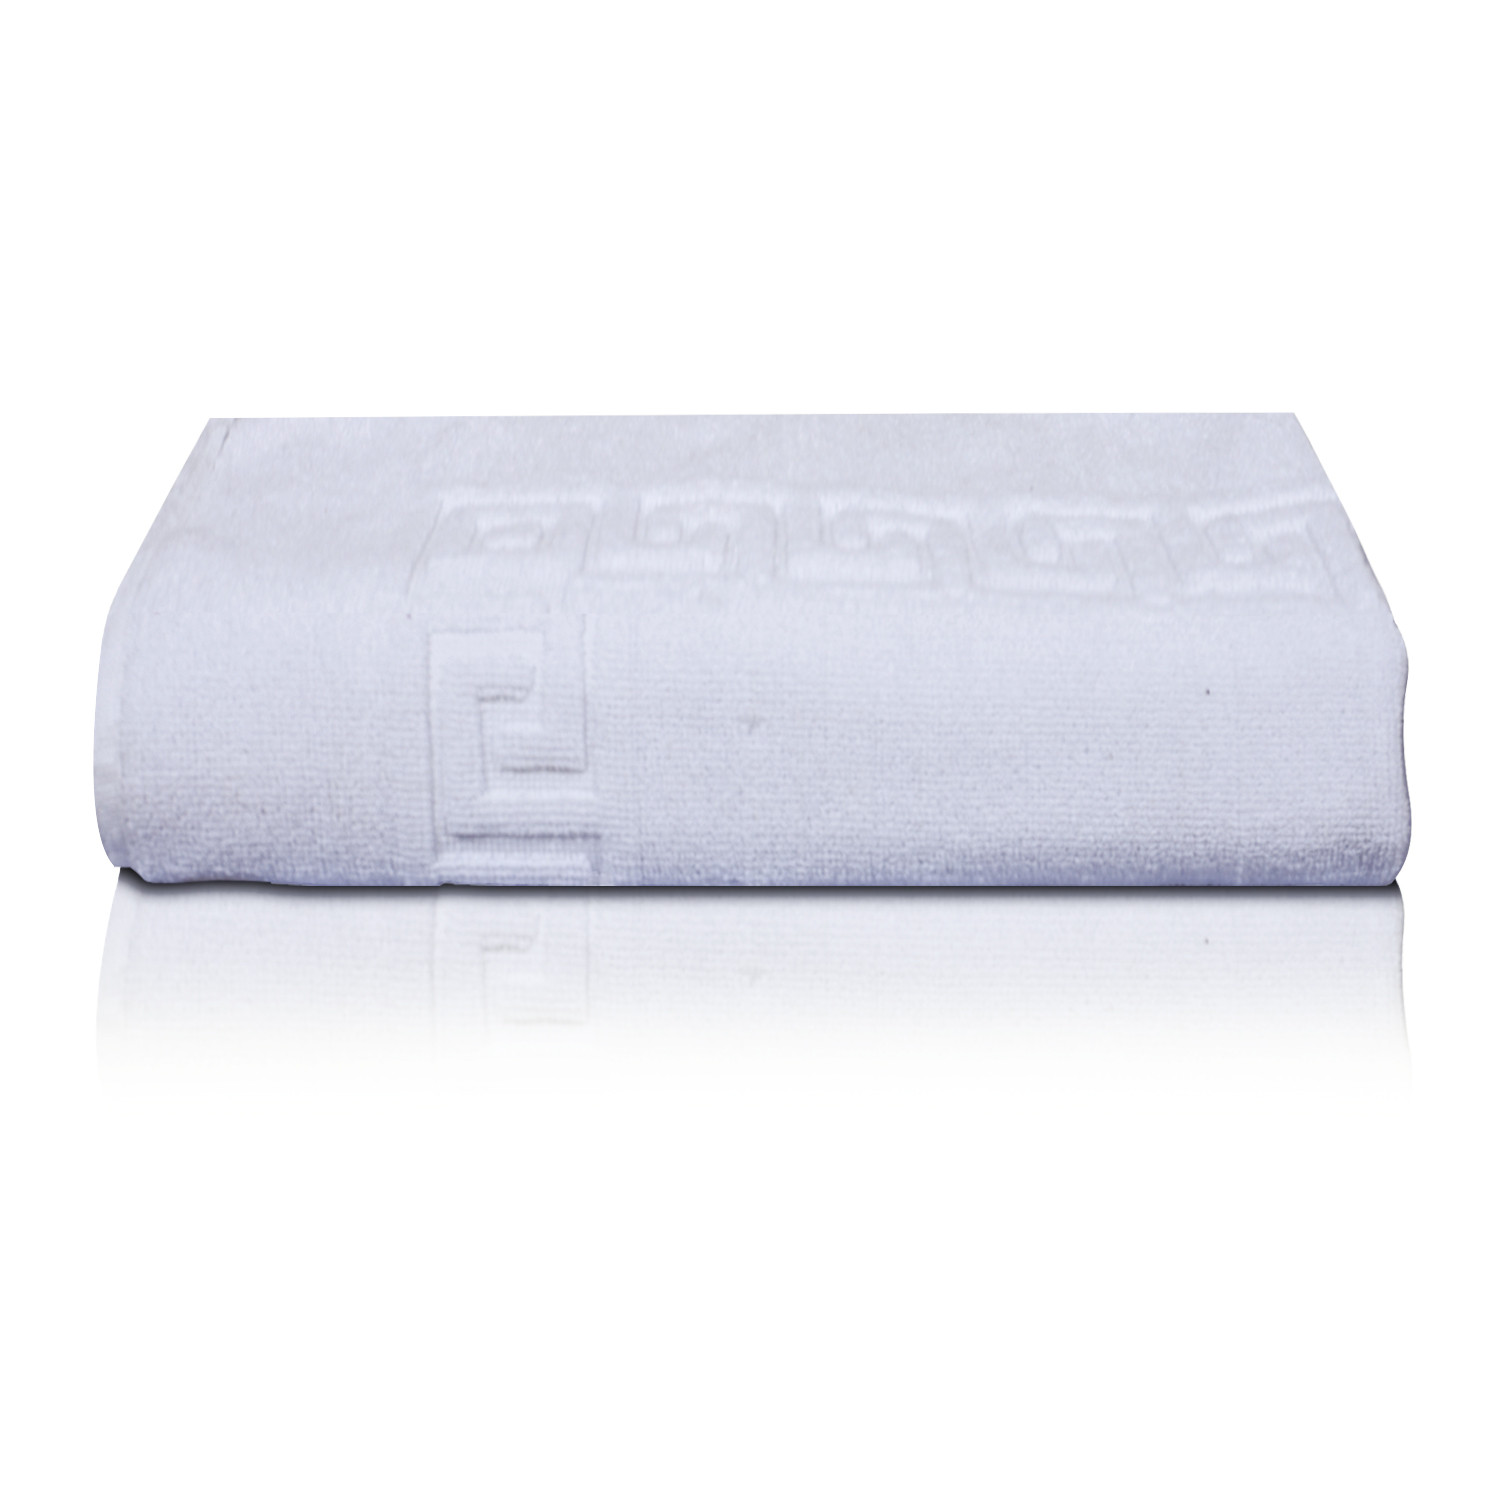 Kuber Industries Greek Design Super Absorbent Cotton 400 GSM Hand Towel|Face Towel|Bath Nets for Men,Women,Kids,30x20 Inches, (White)